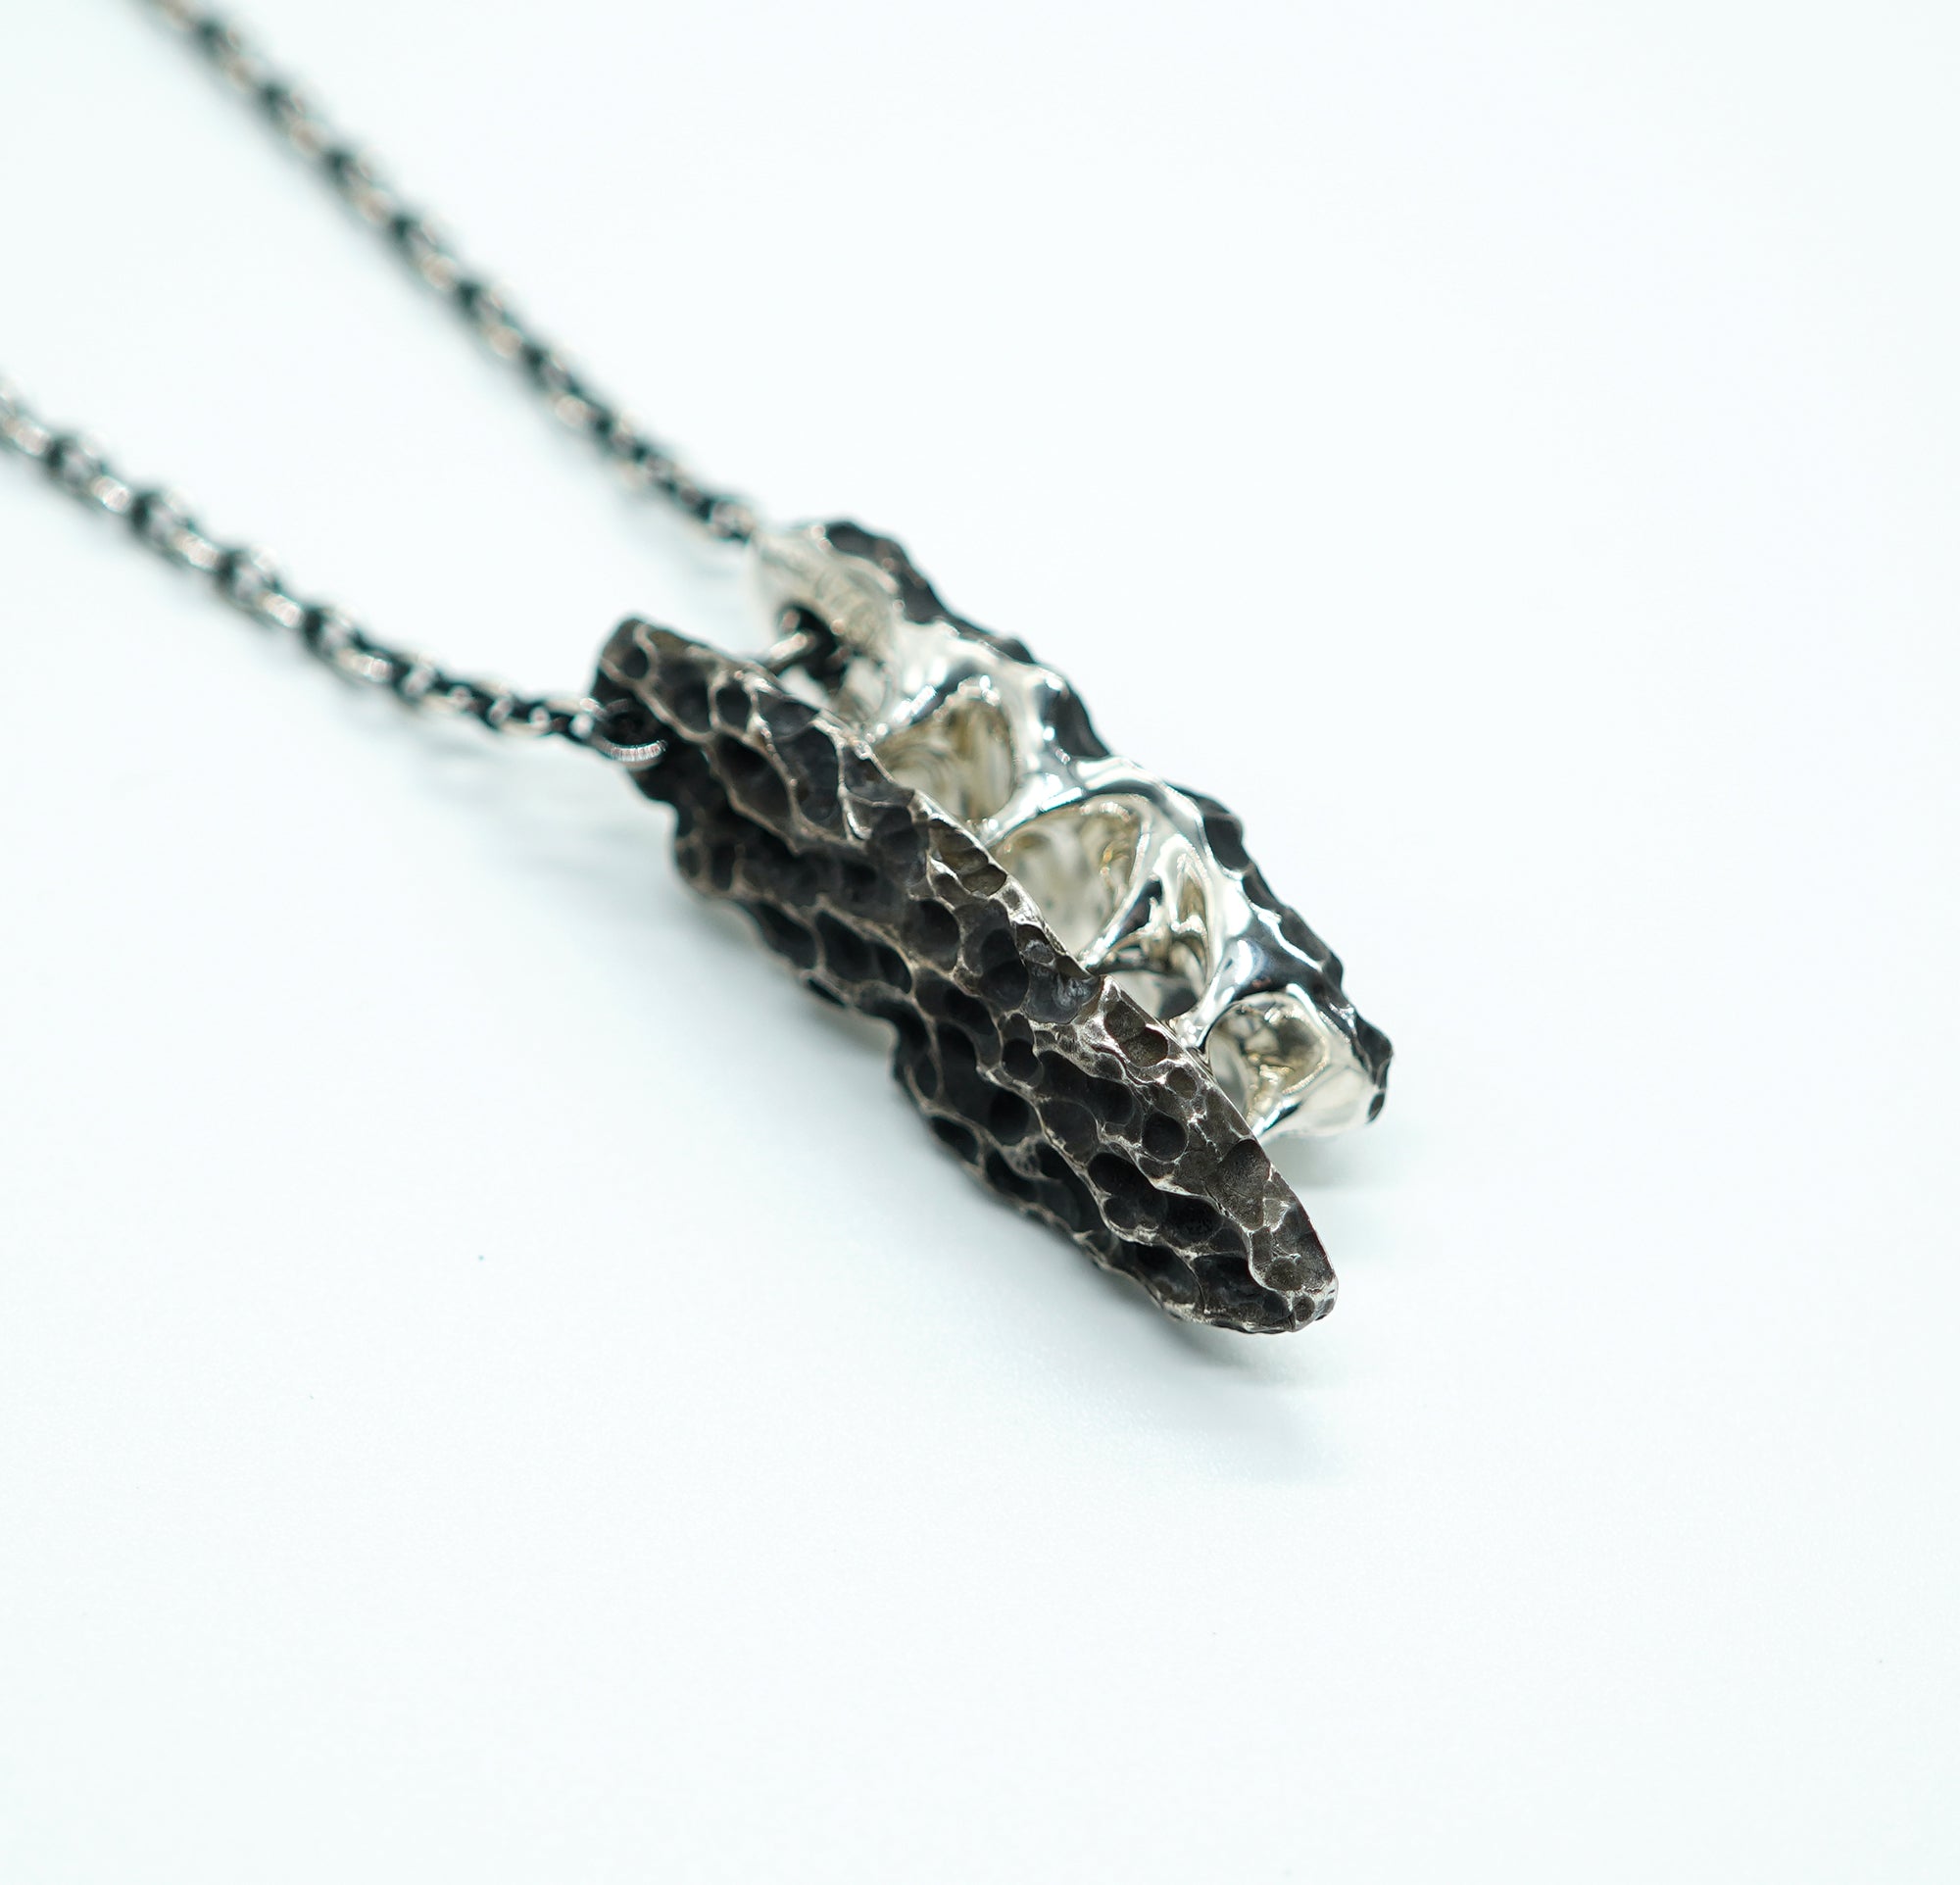 Eternal - Silver necklace with original clasp - Avant Gardist